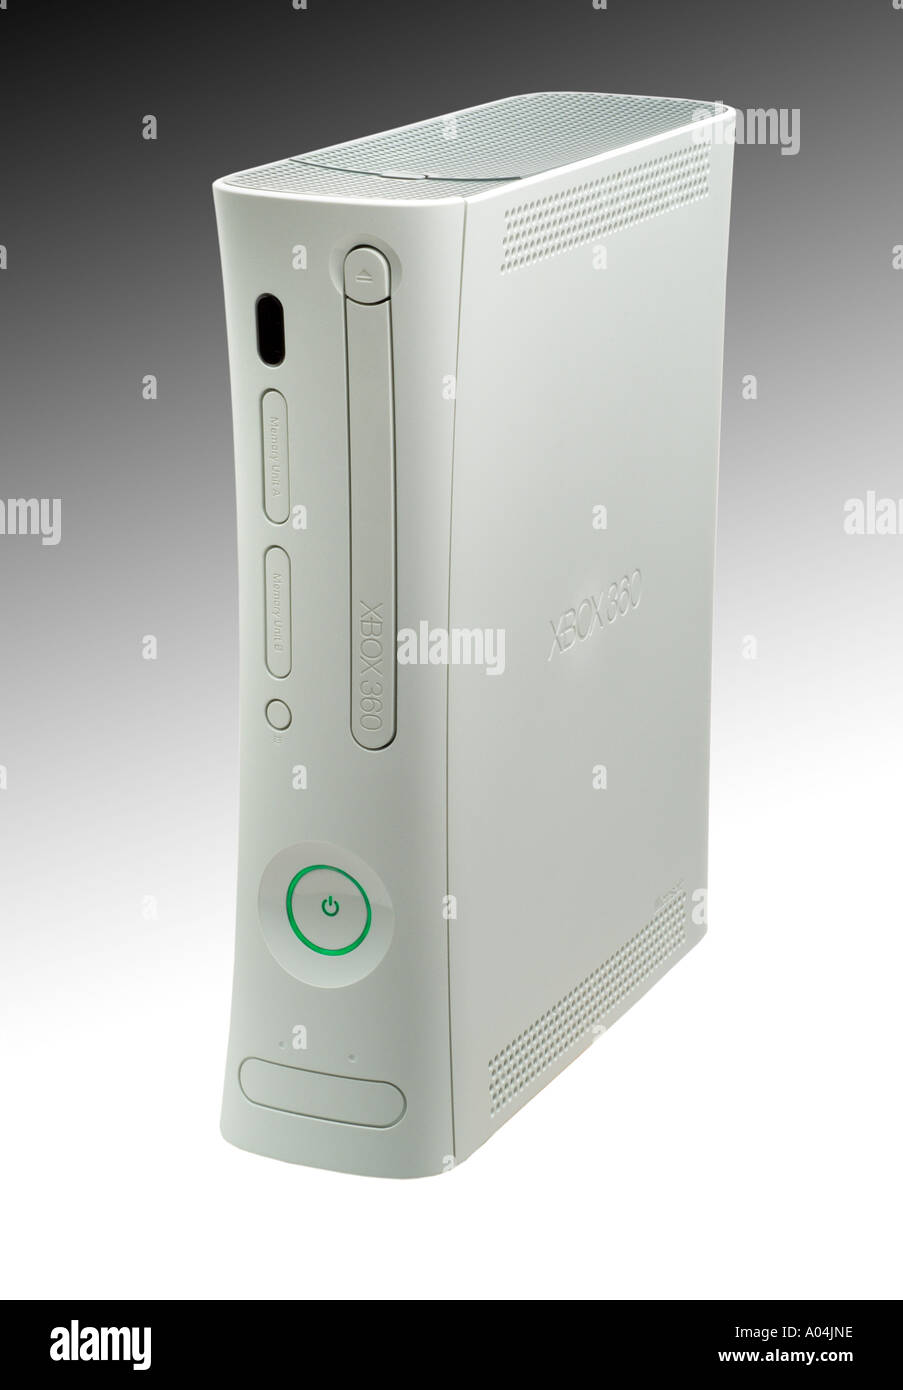 Xbox 360 xbox x box360 England UK Royaume-Uni GB Grande Bretagne l'Europe Union Européenne UE Banque D'Images